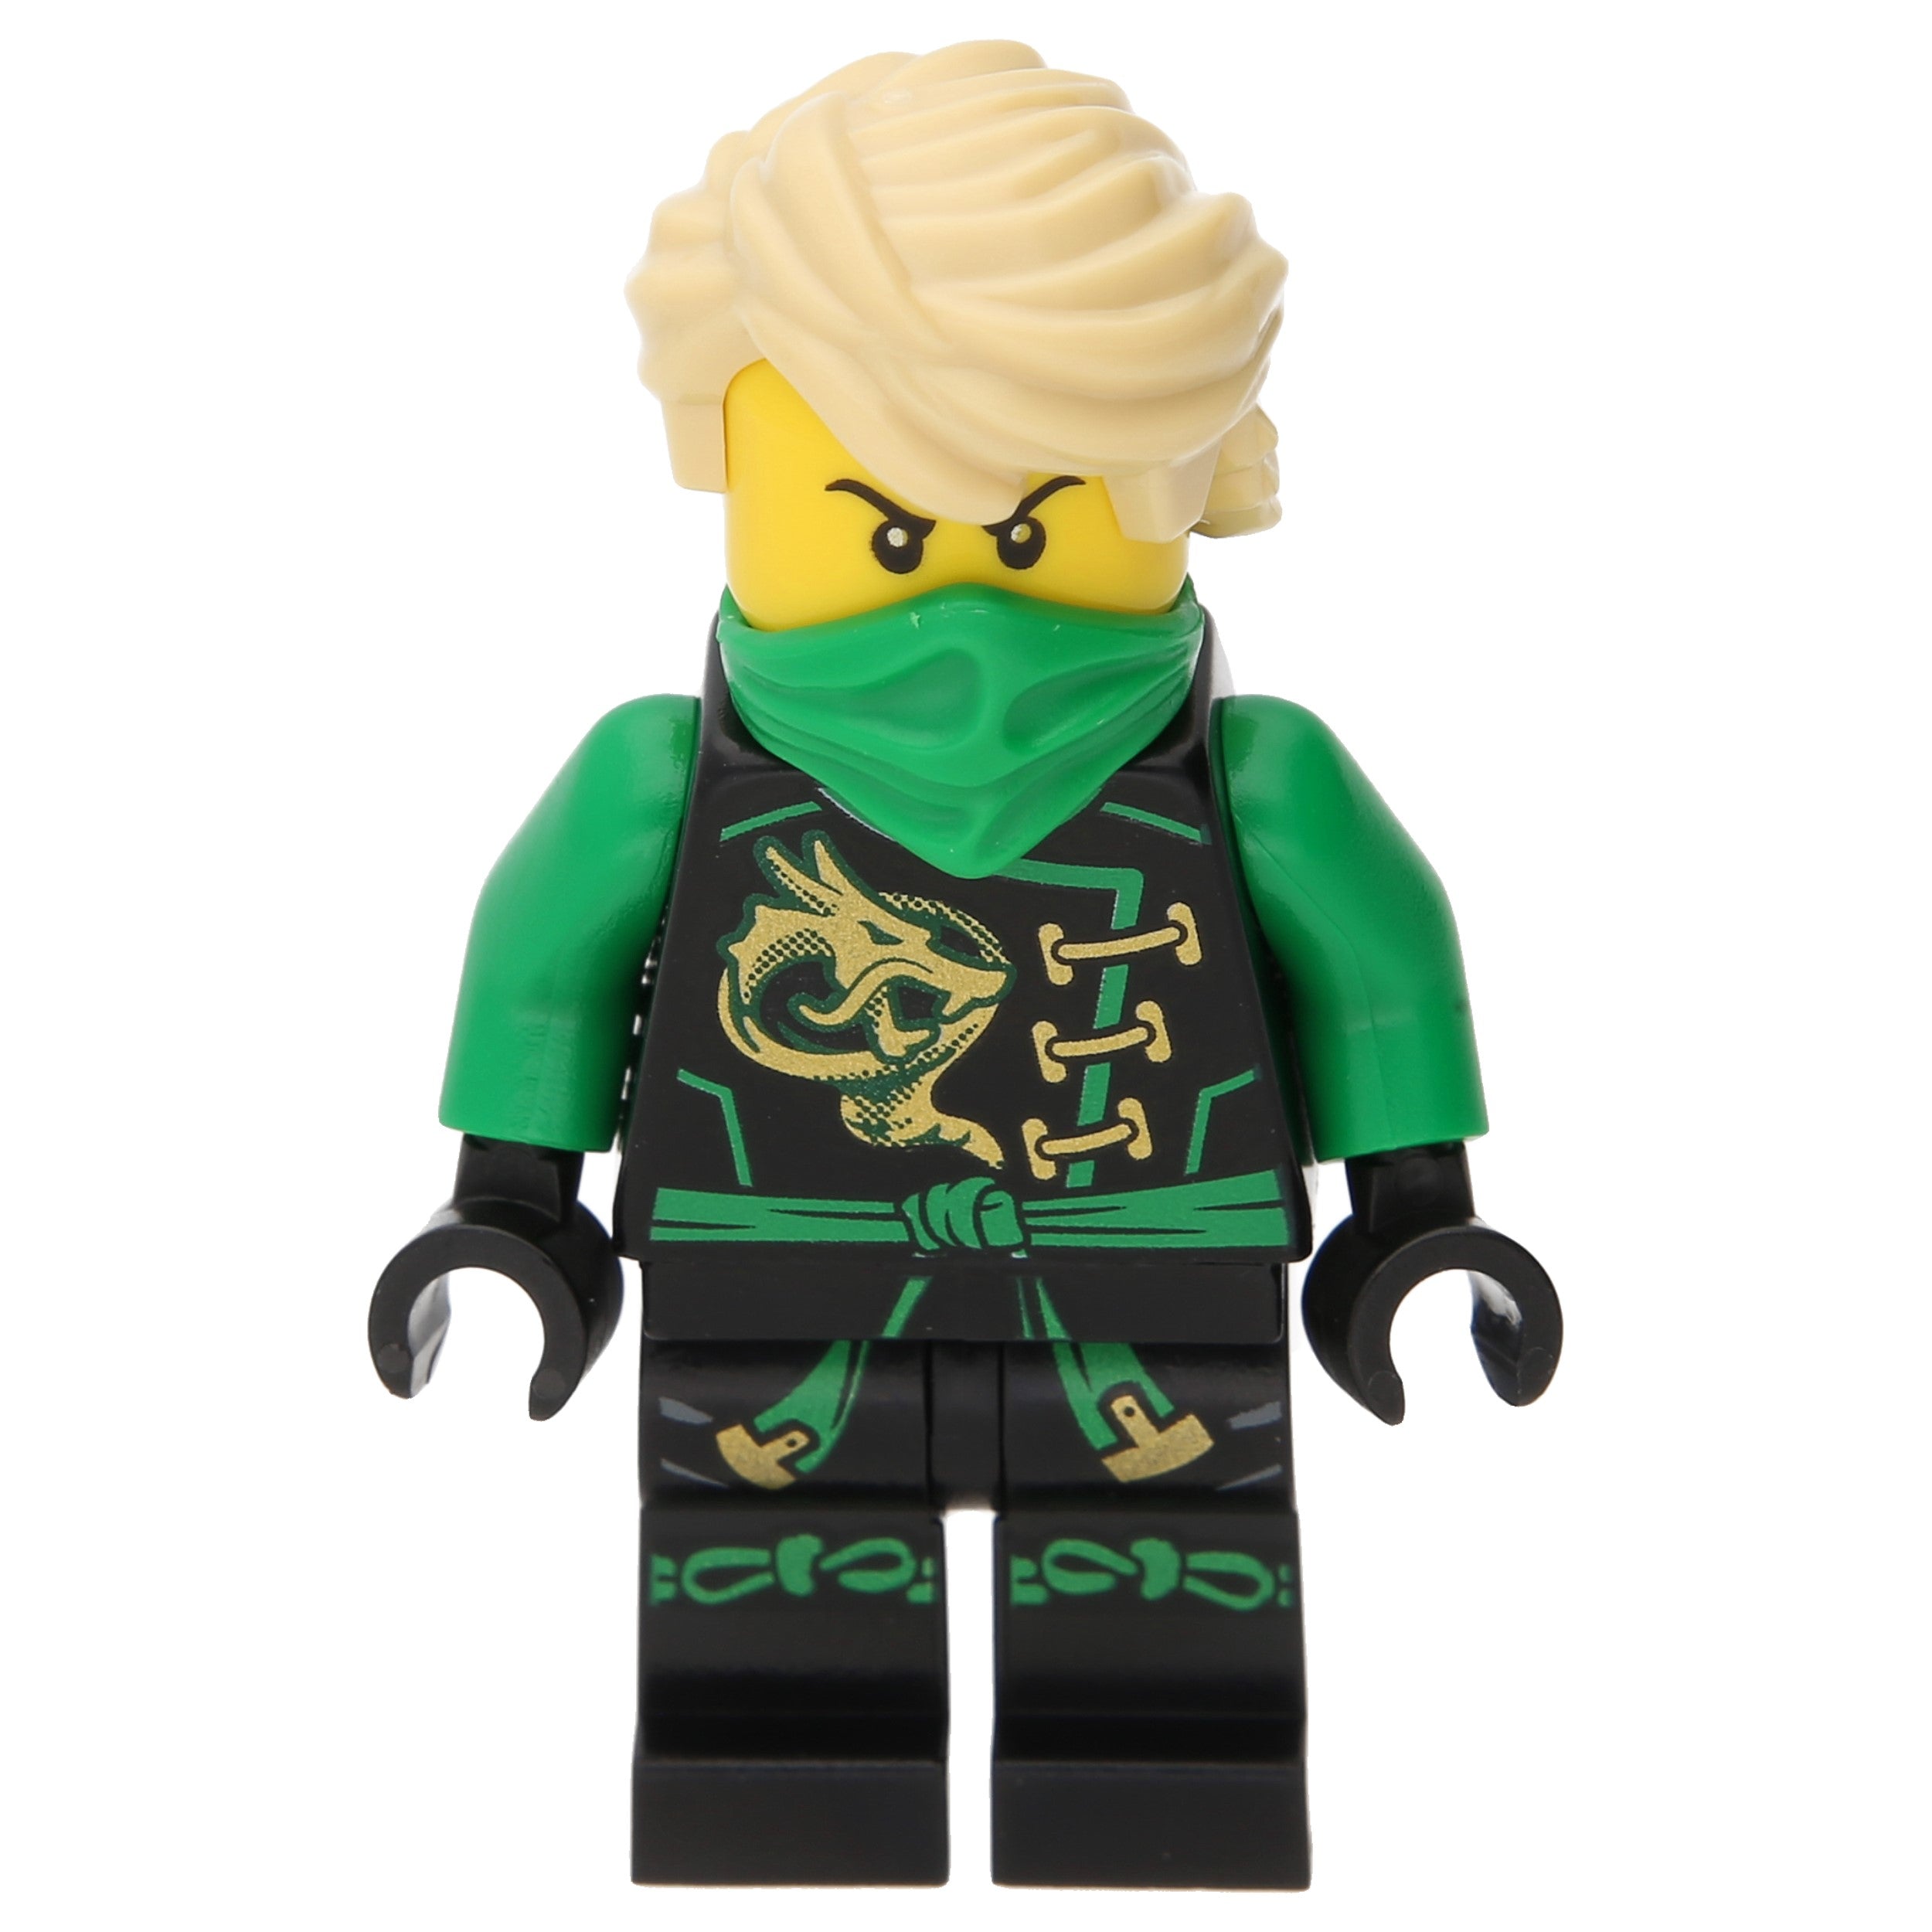 Lego Ninjago Minifigures - Lloyd with hair and mask (air pirates)